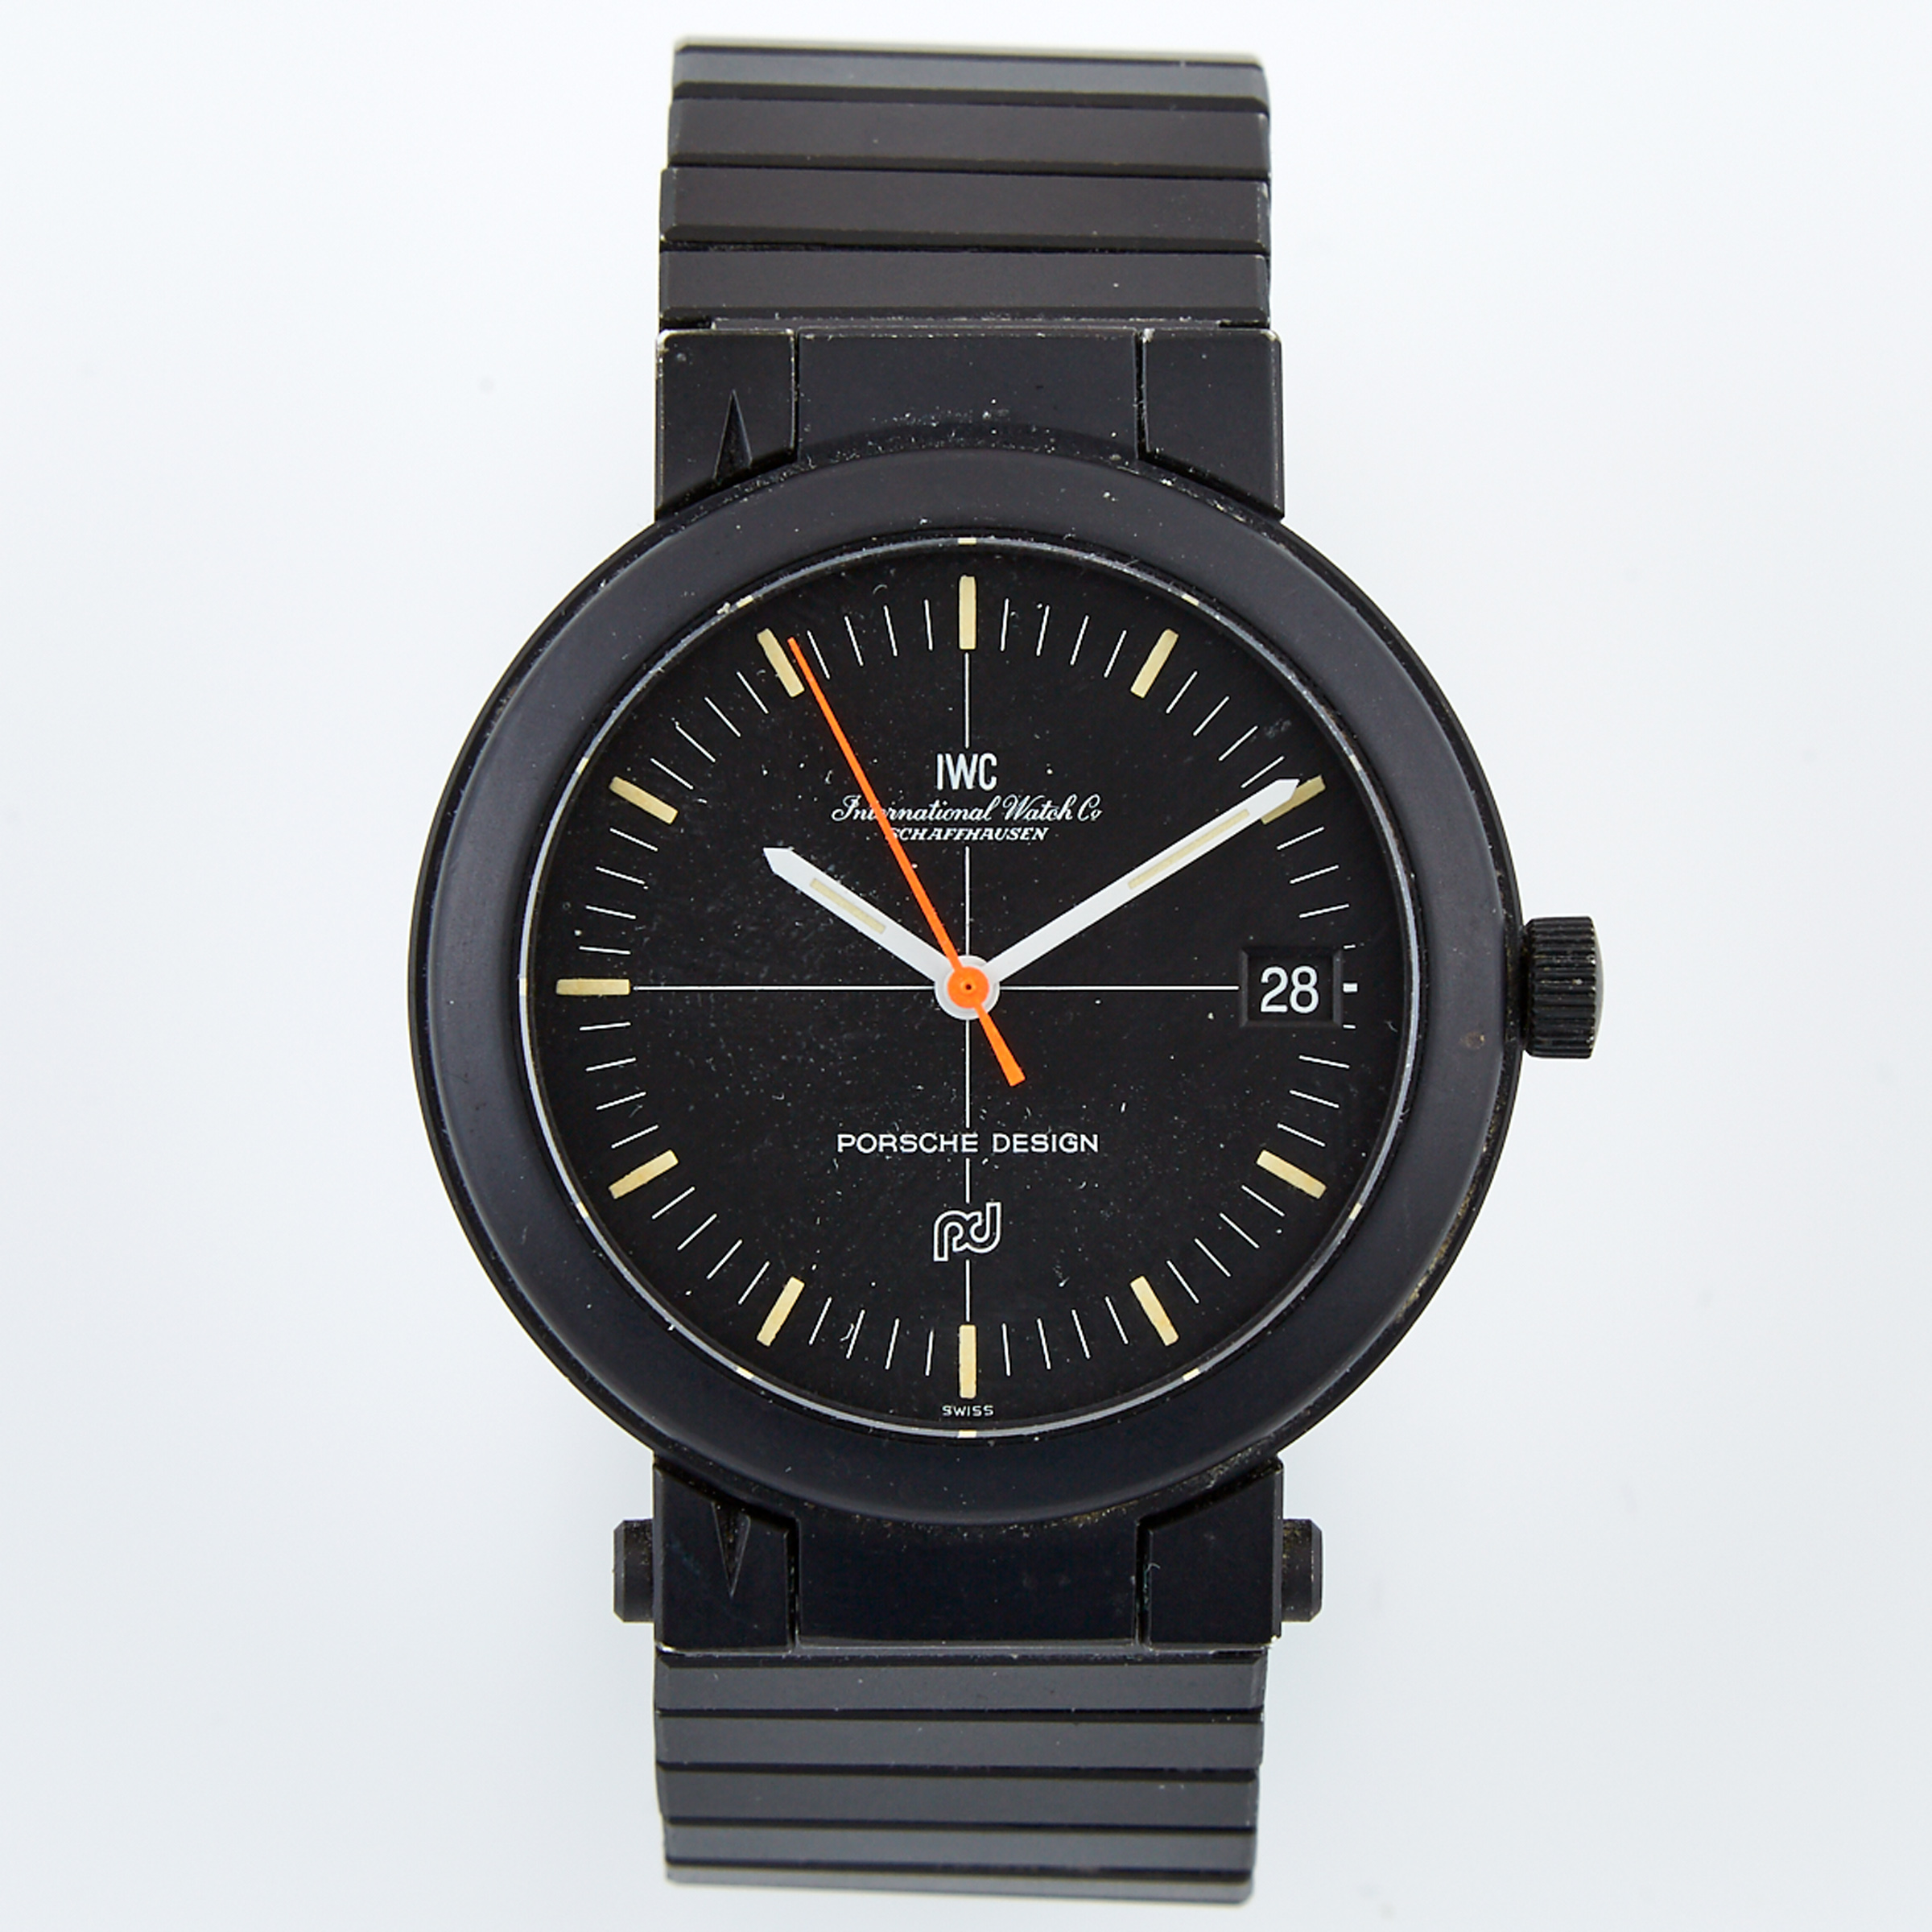 IWC-Schaffhausen Porsche Design Wristwatch With Compass And Date